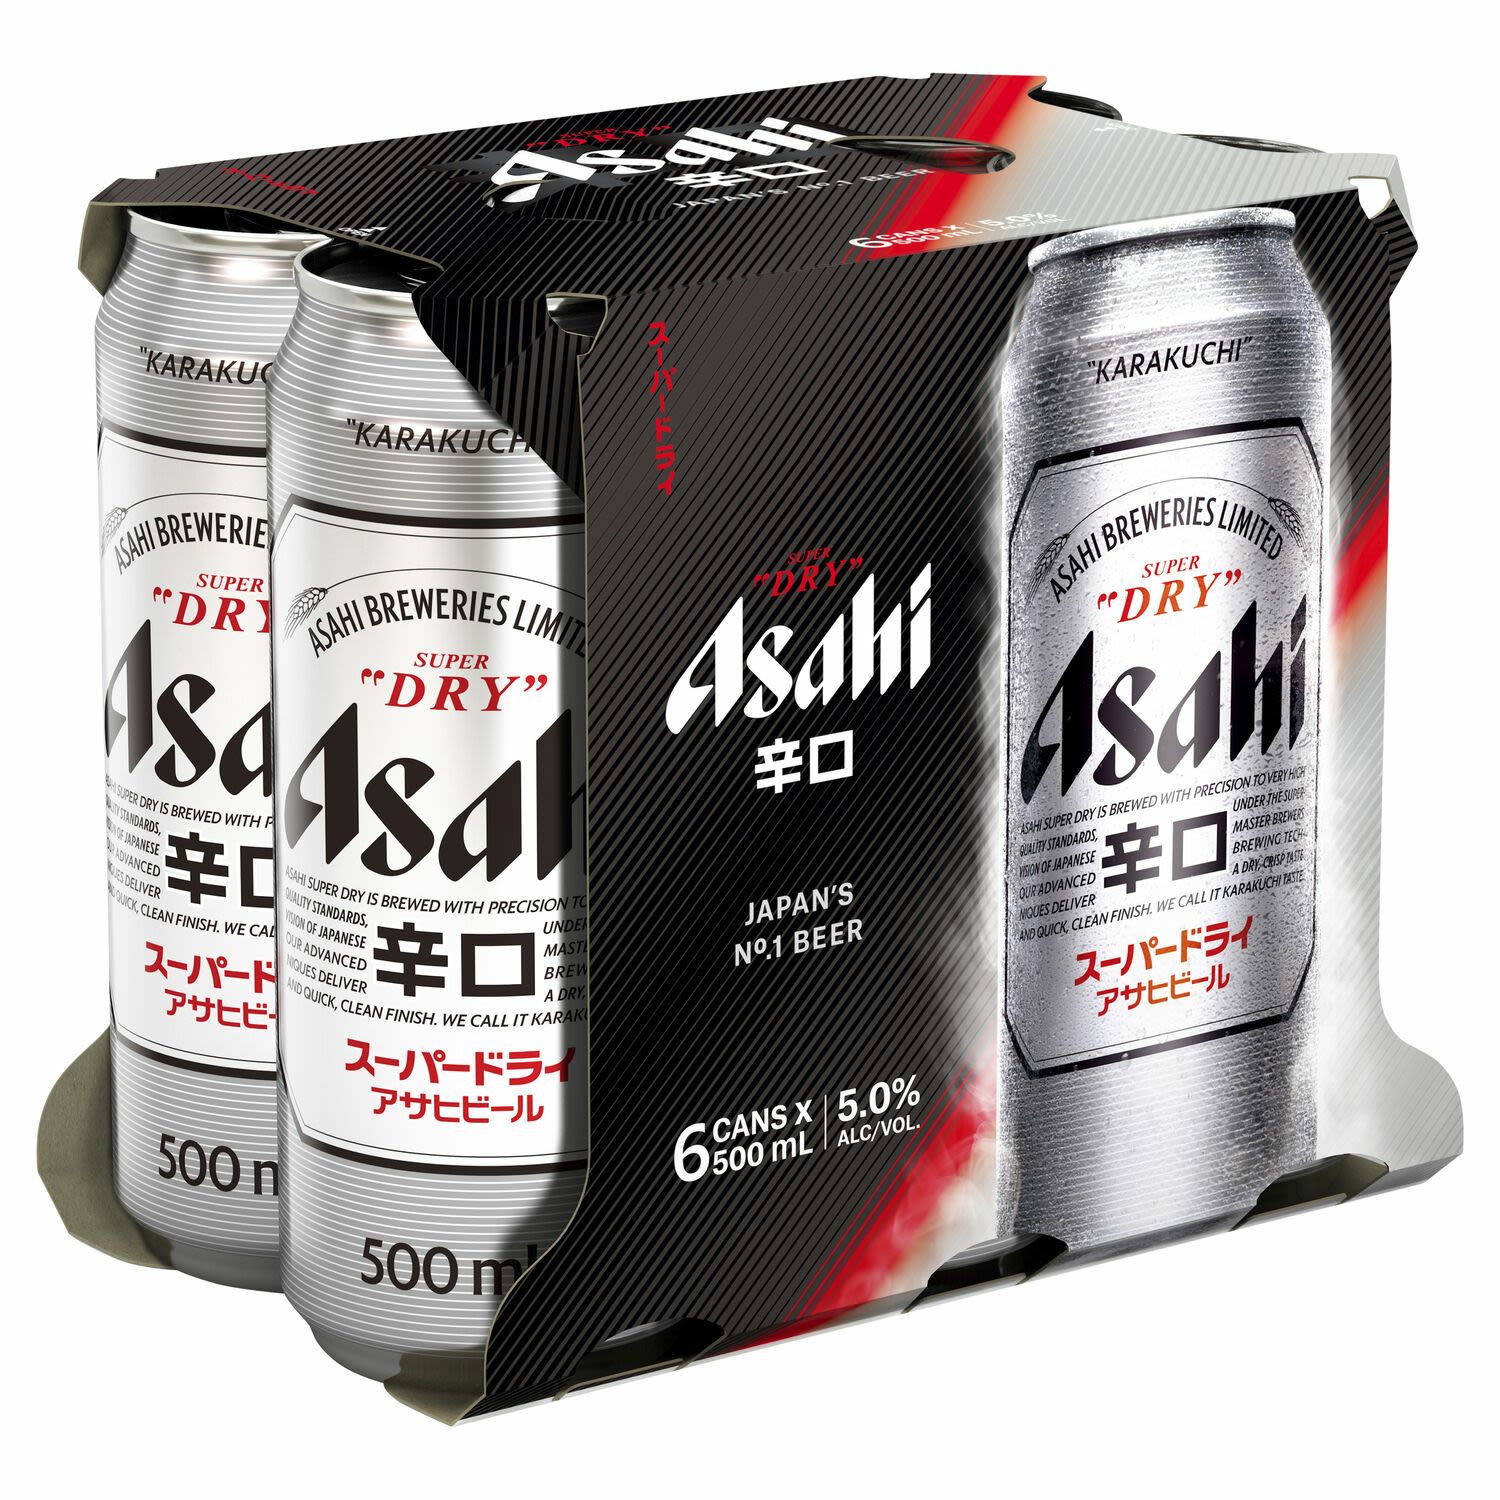 Asahi Super Dry Cans 500mL<br /> <br />Alcohol Volume: 5.00%<br /><br />Pack Format: 6 Pack<br /><br />Standard Drinks: 2</br /><br />Pack Type: Can<br /><br />Country of Origin: Japan<br />